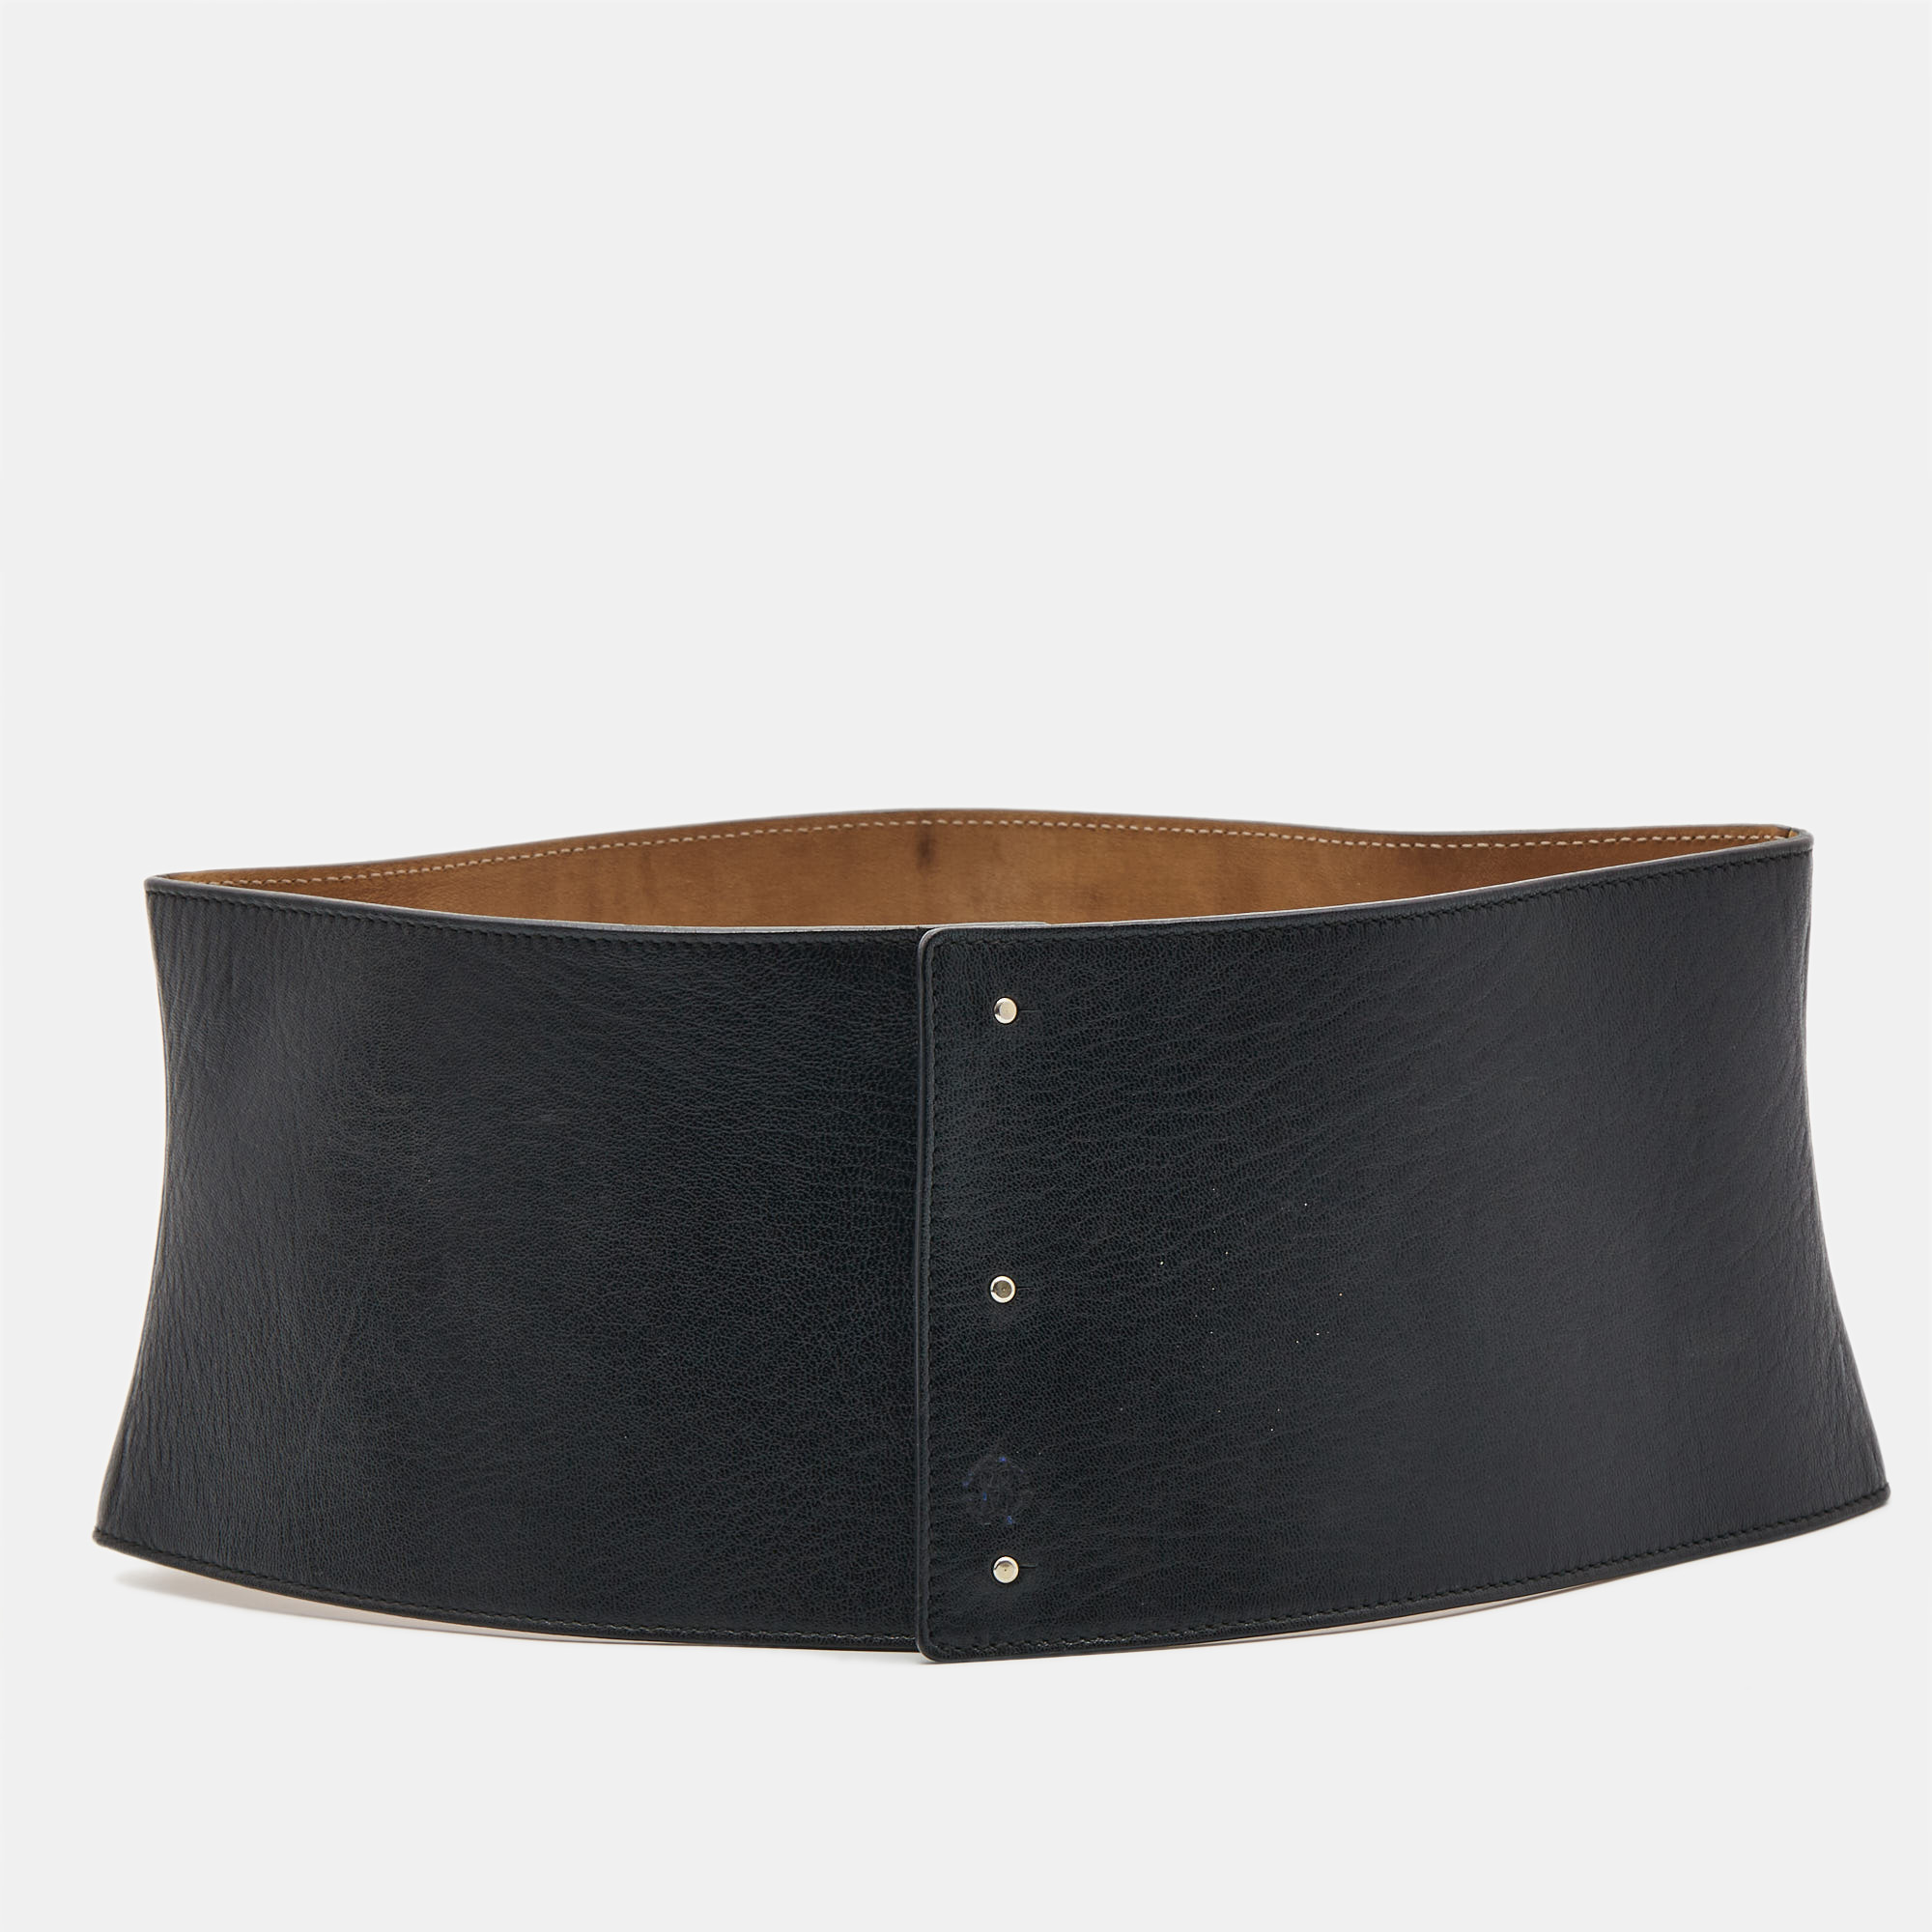 Roberto cavalli black snake embossed leather wide waist belt 70cm